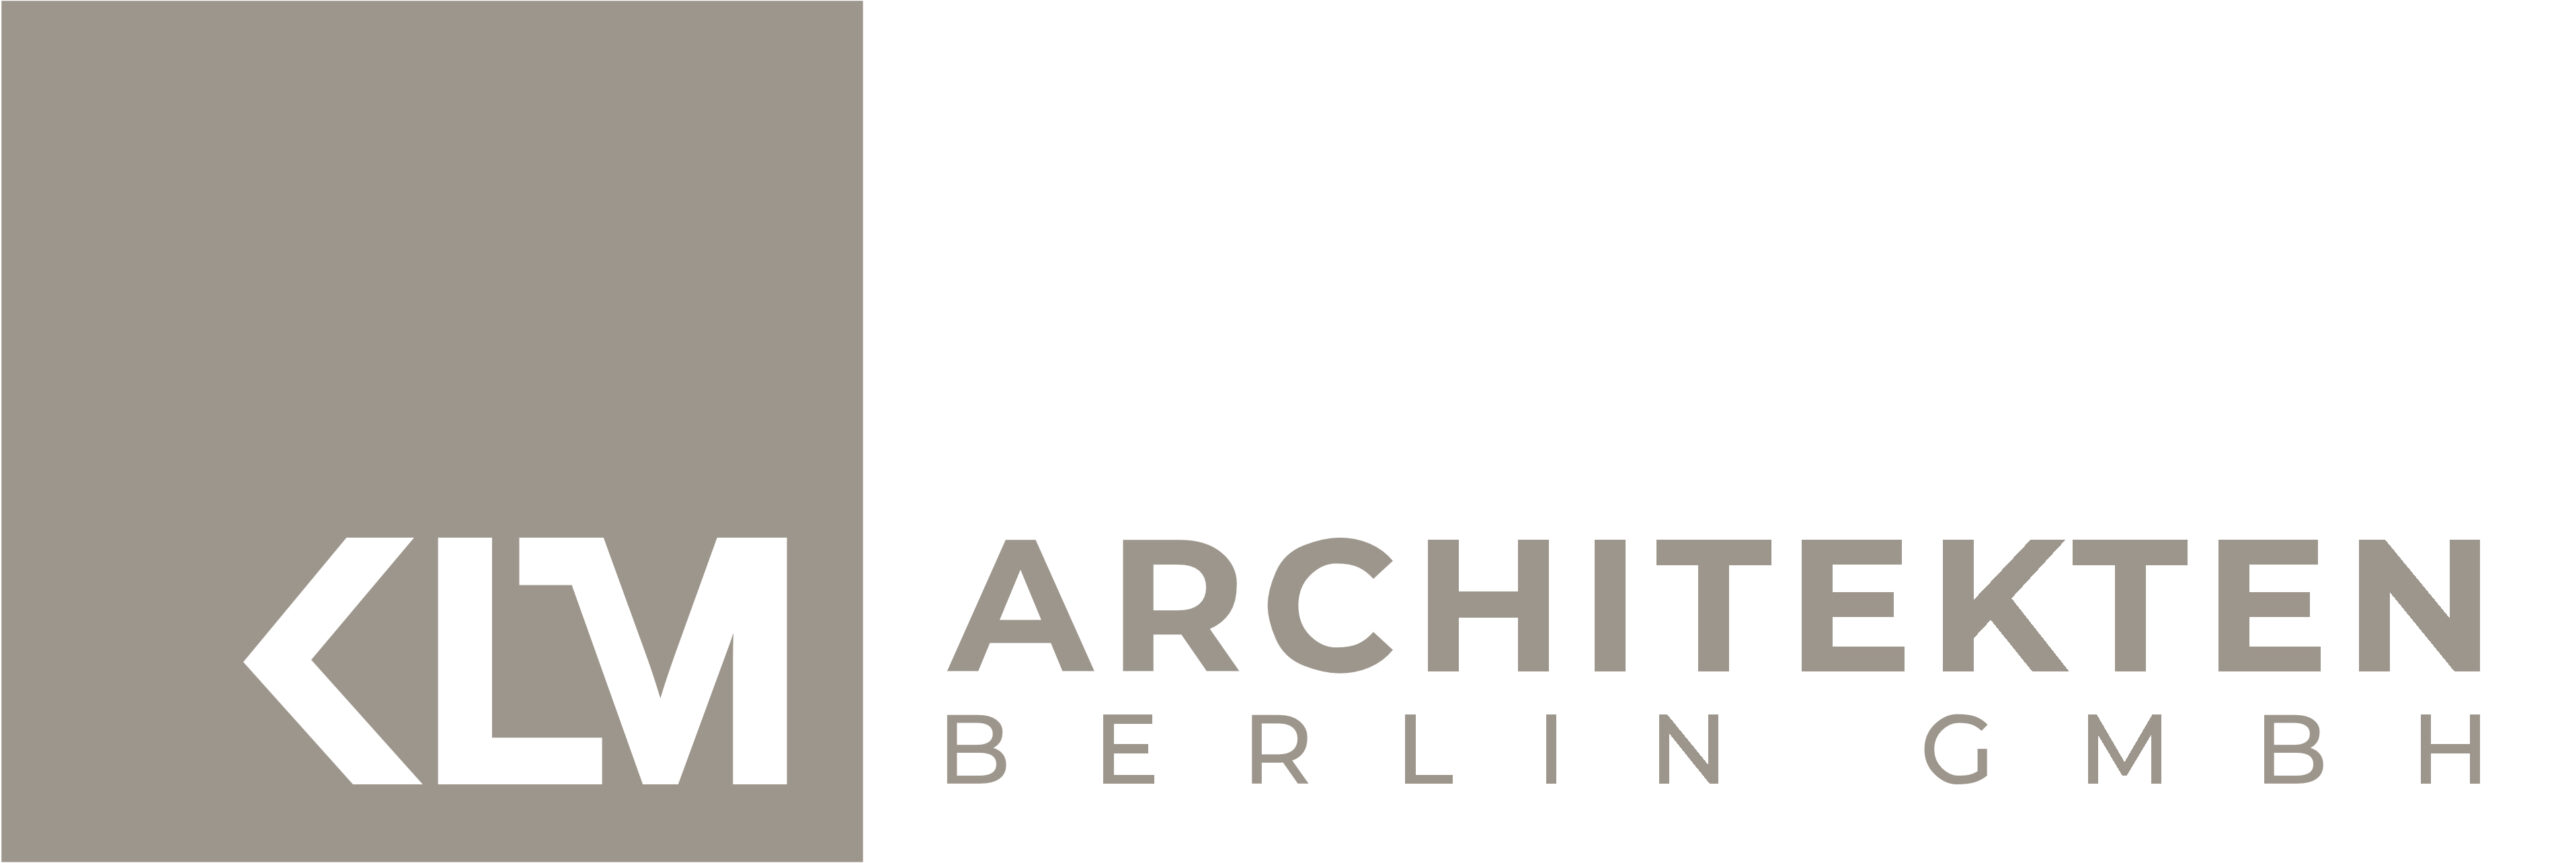 klm Architekten Berlin logo